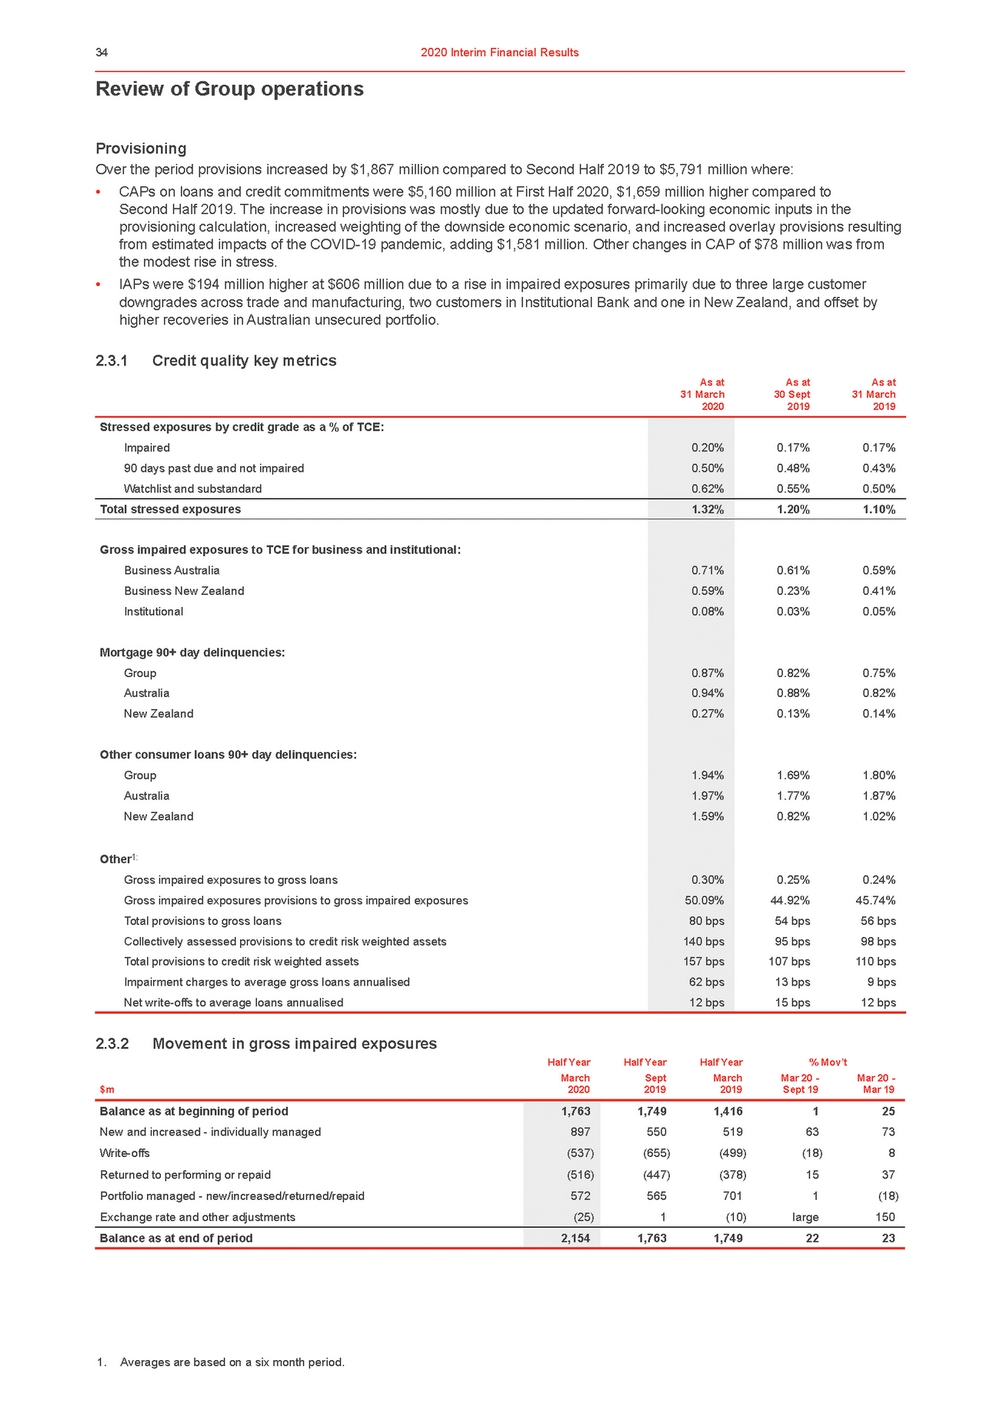 11676-3-ex1_westpac 2020 interim financial results announcement_page_039.jpg